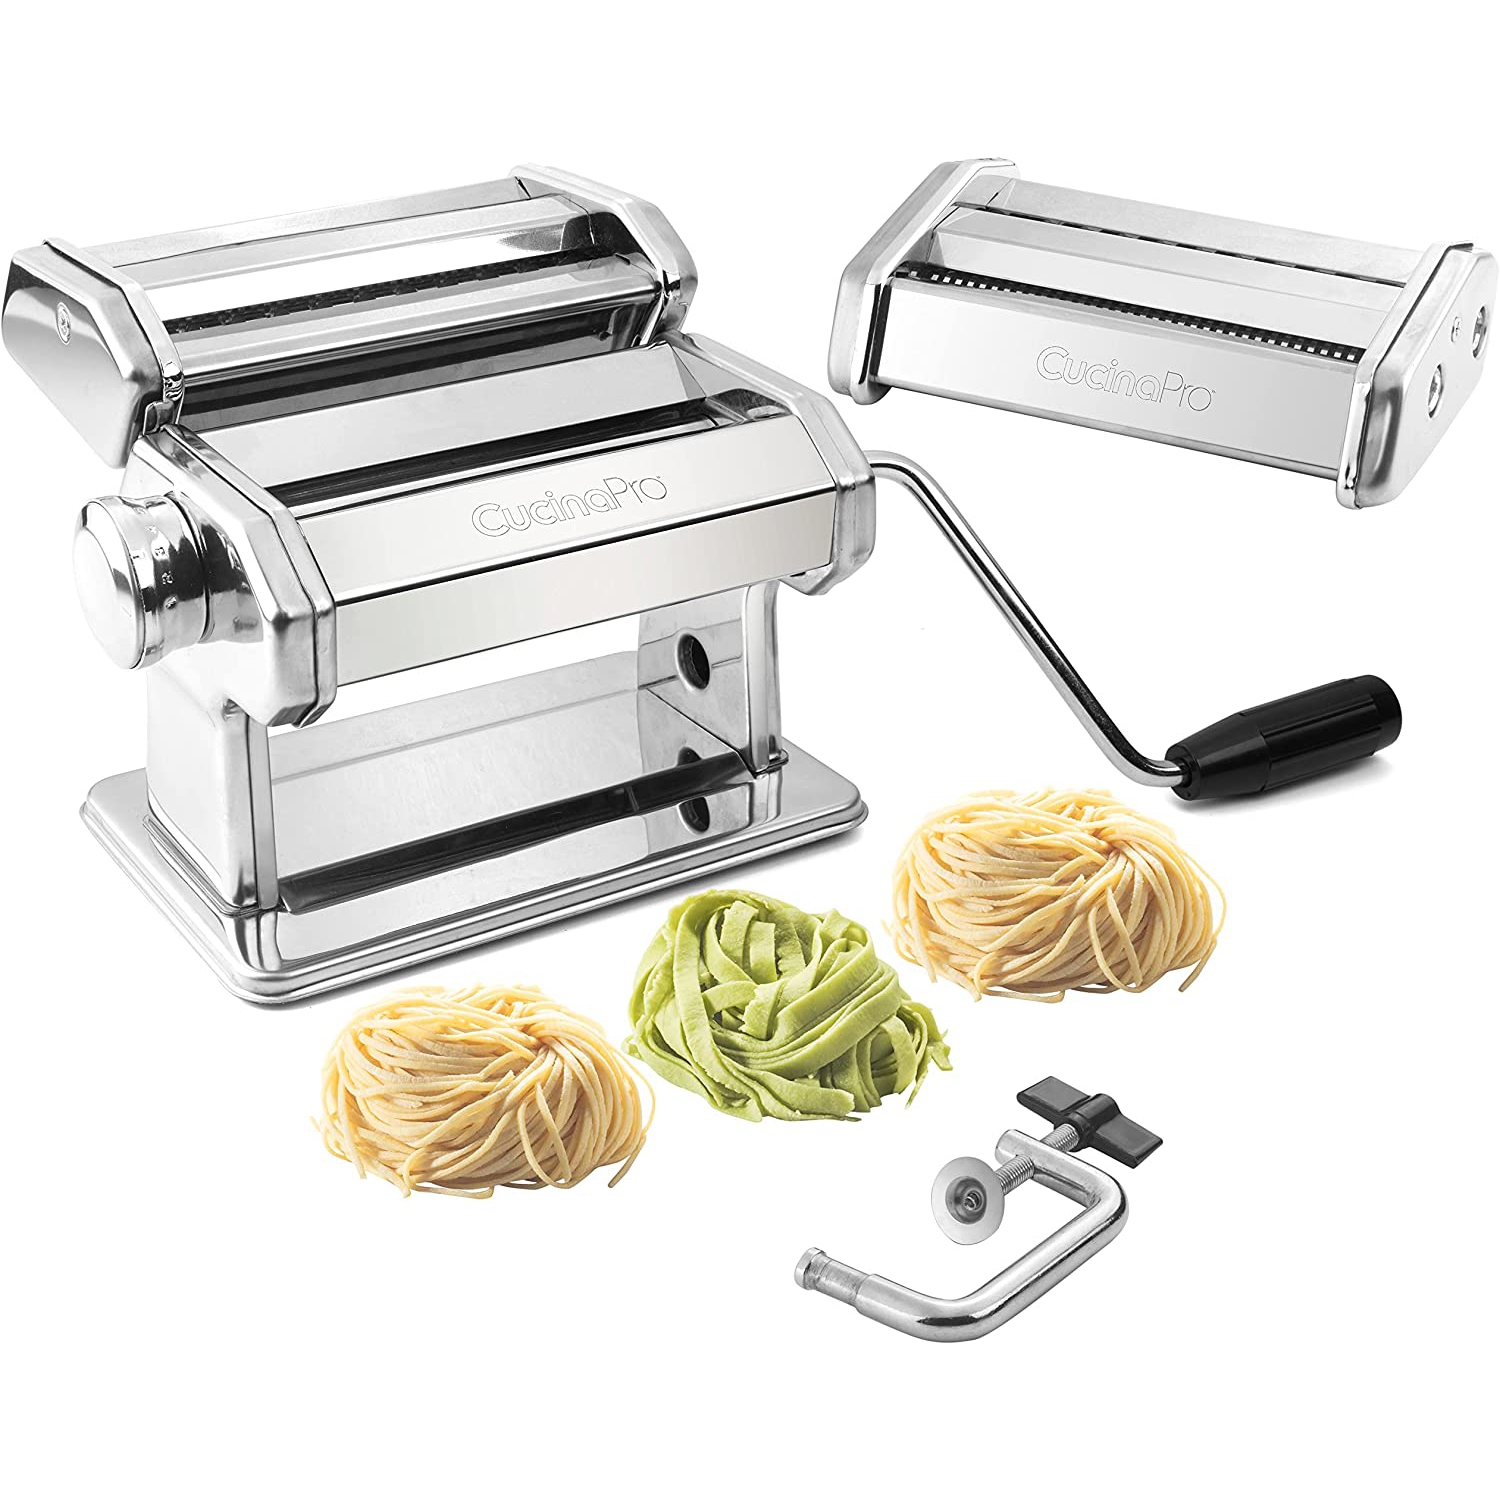 Pasta Maker Machine (177) By Cucina Pro - Heavy Duty Steel Construction - with Fettucine and Spaghetti attachment